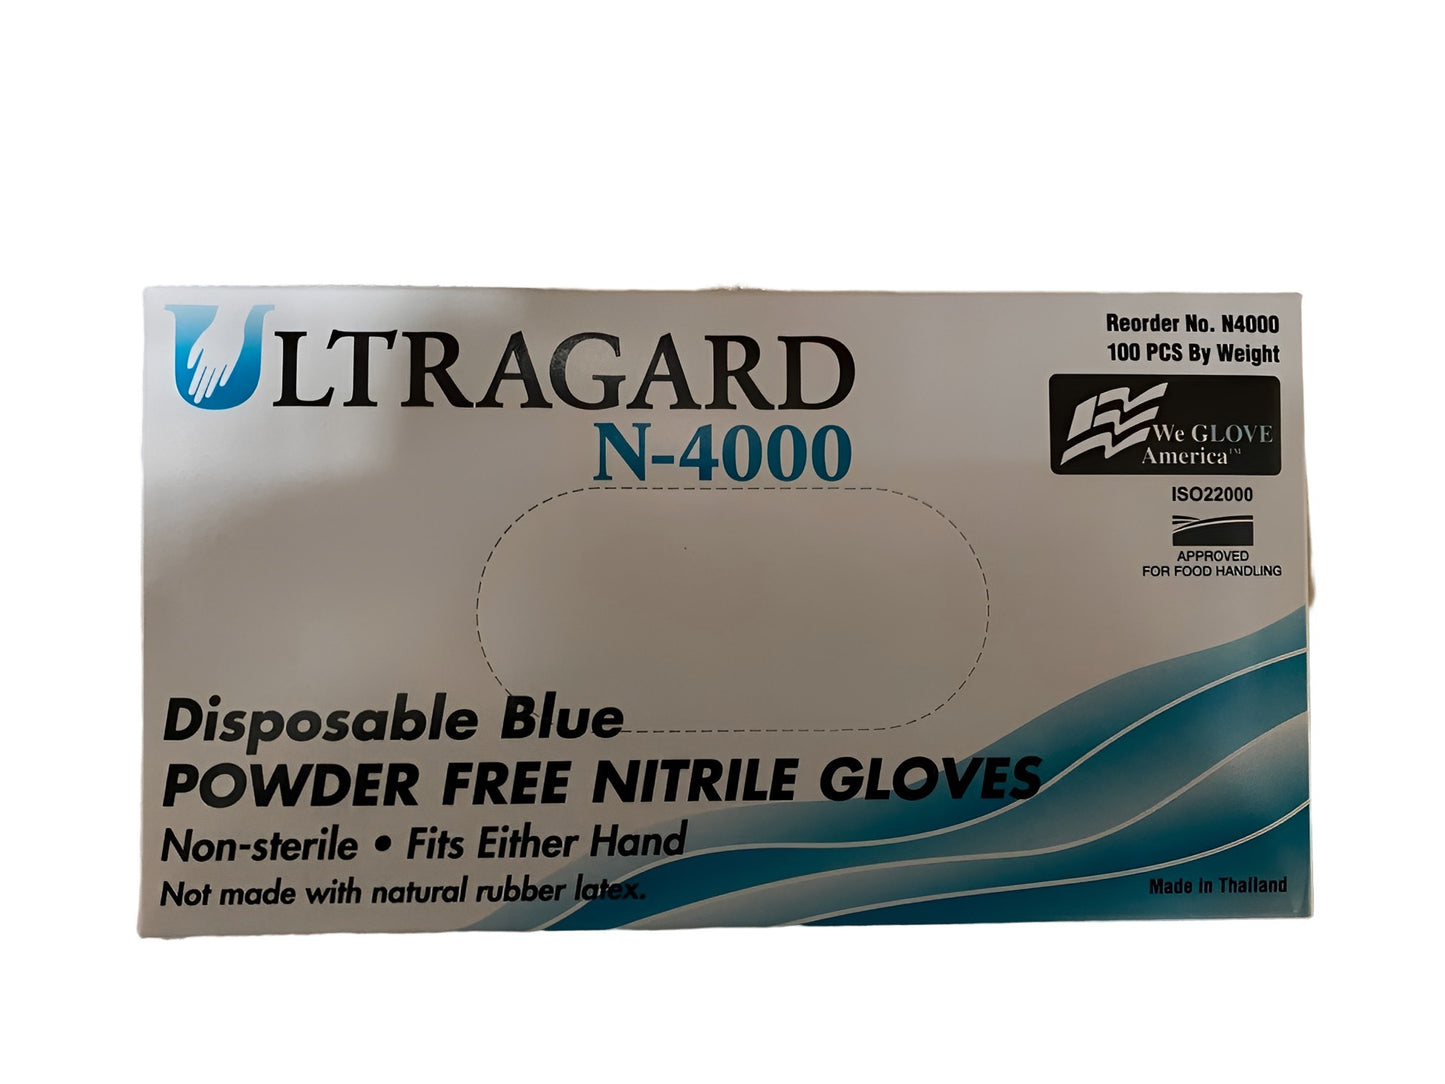 Ultragard N-4000 Powder-Free Nitrile Gloves Blue Size M, L, and XL (100 box)